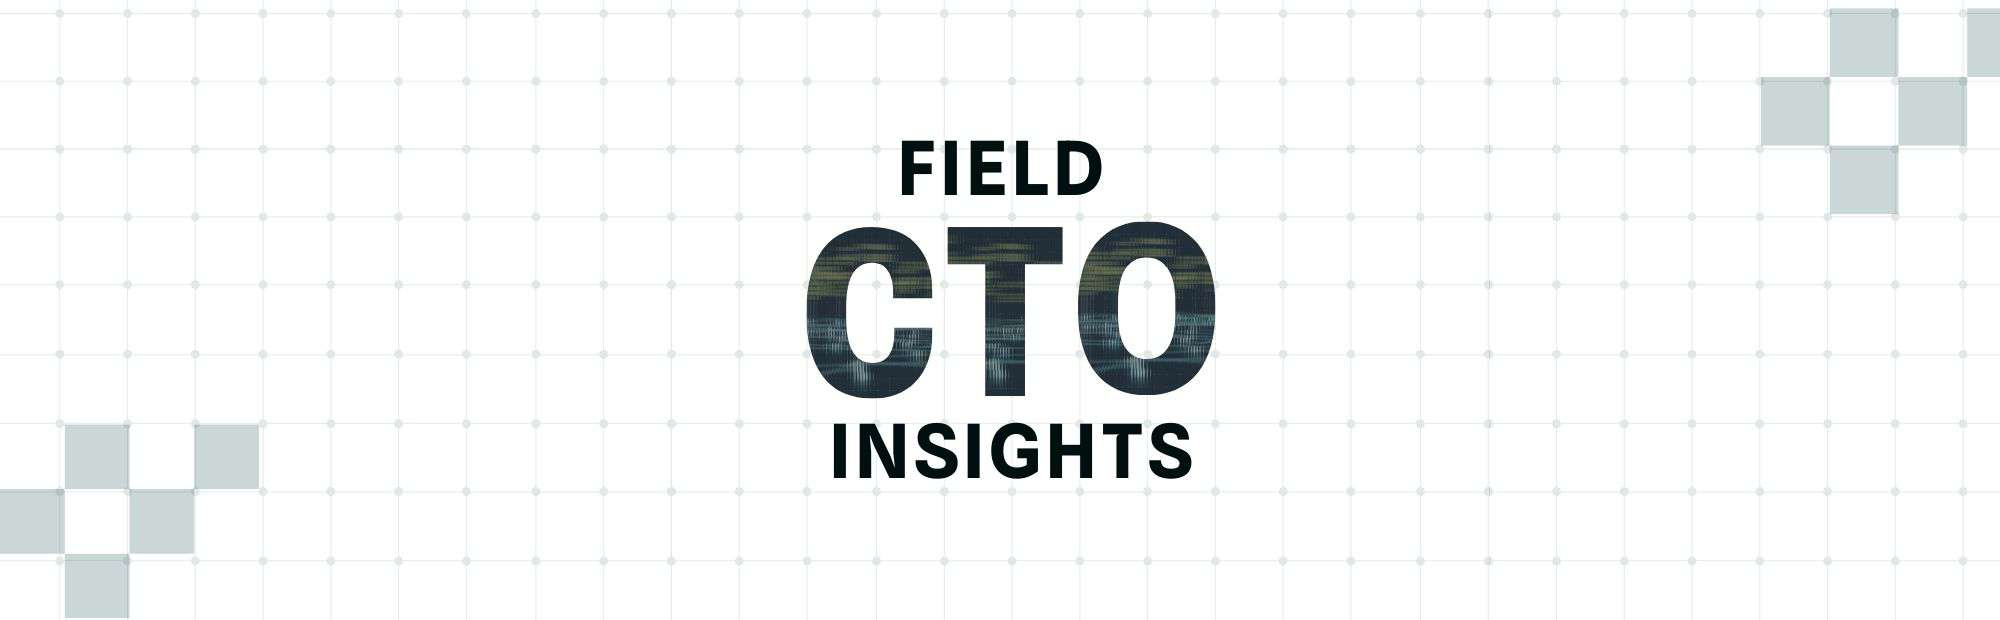 Field CTO Insights